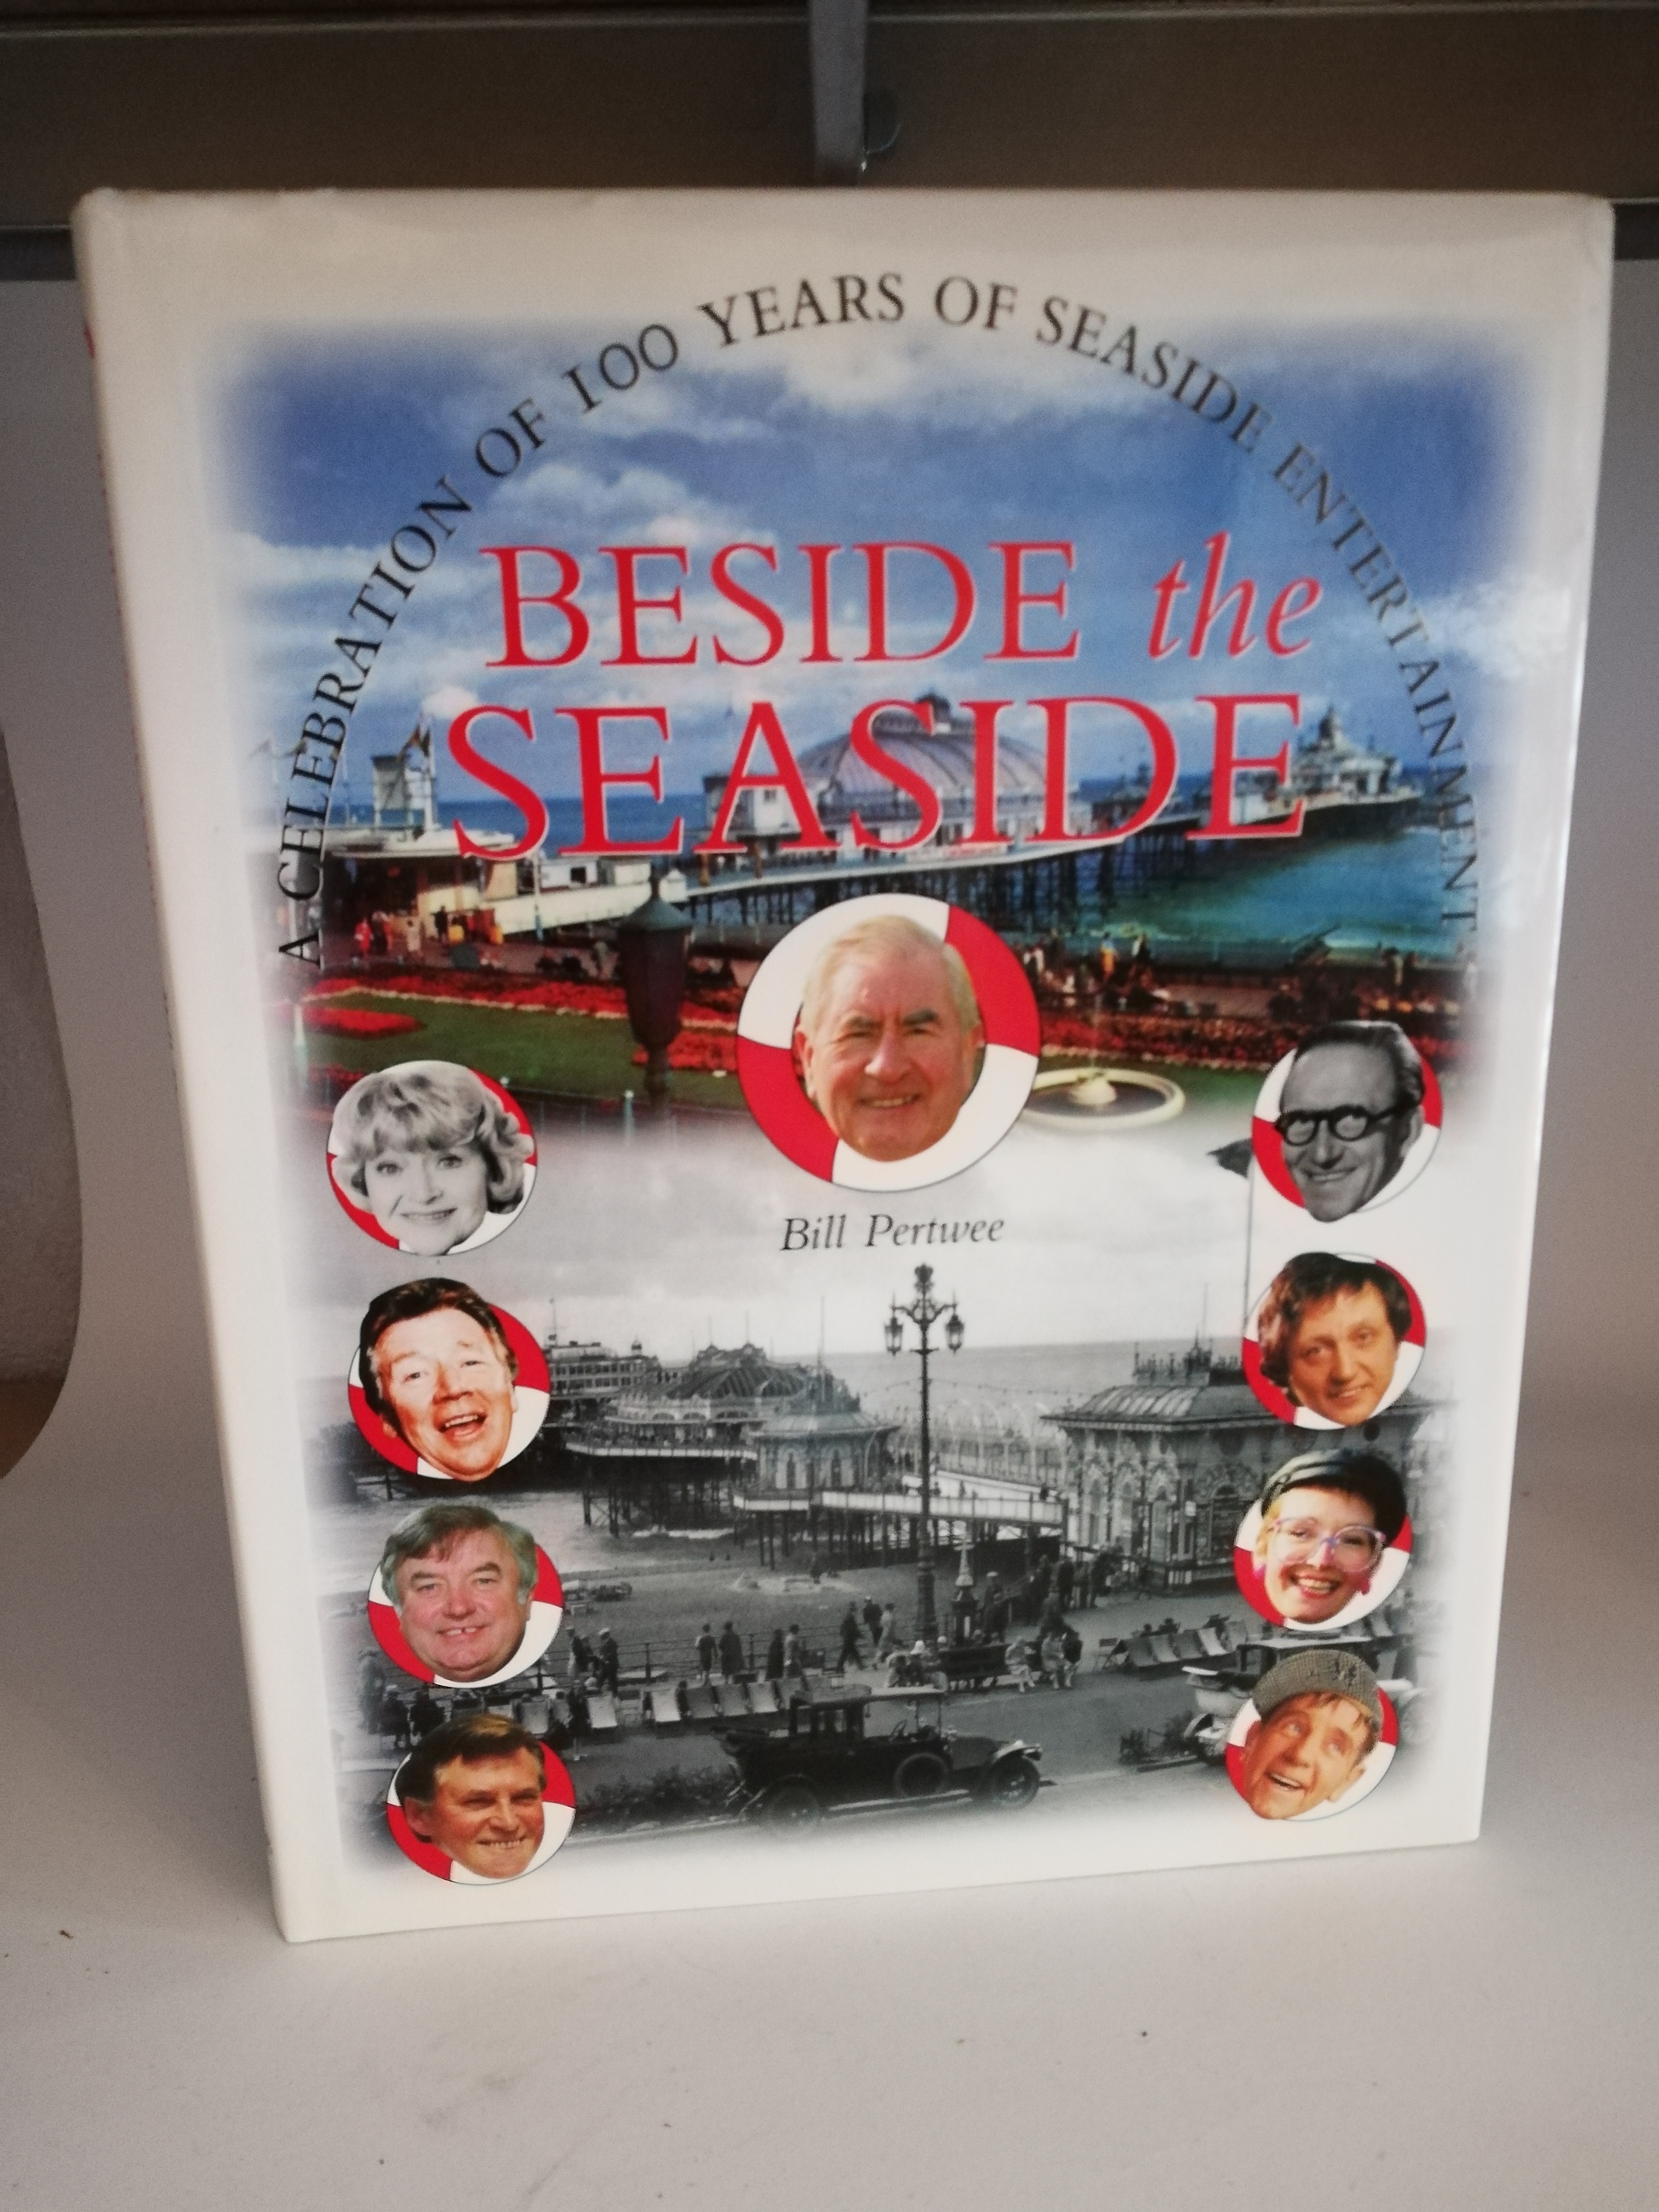 Bill Pertwee  Beside the Seaside. A celebration of 100 years of seaside entertainment 